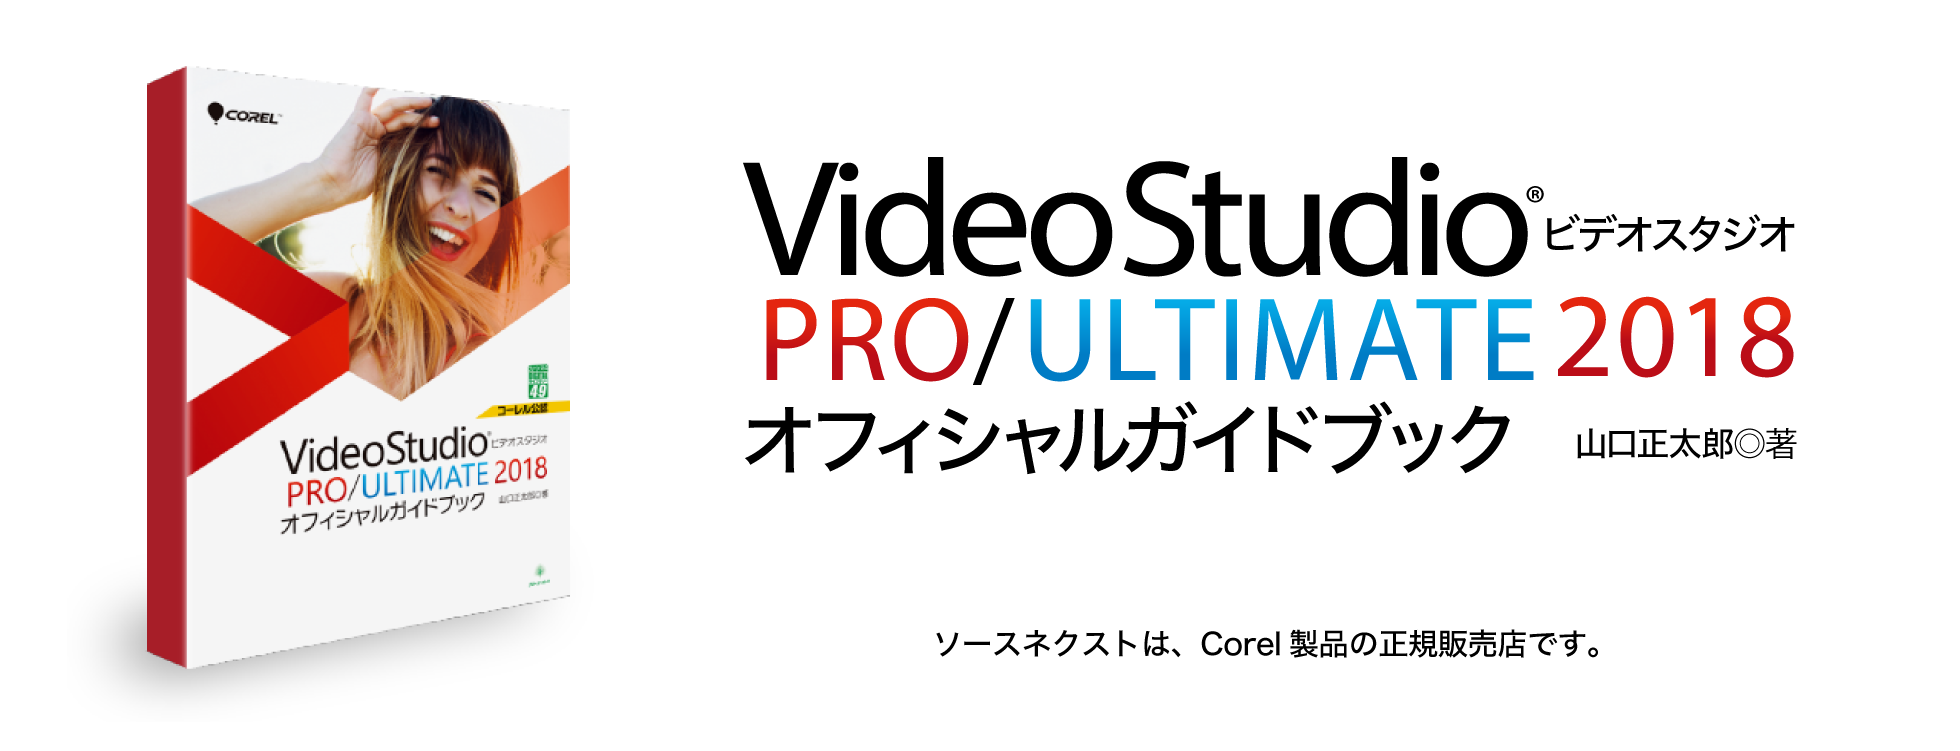 Corel Video Studio 2018 PRO/ULTI